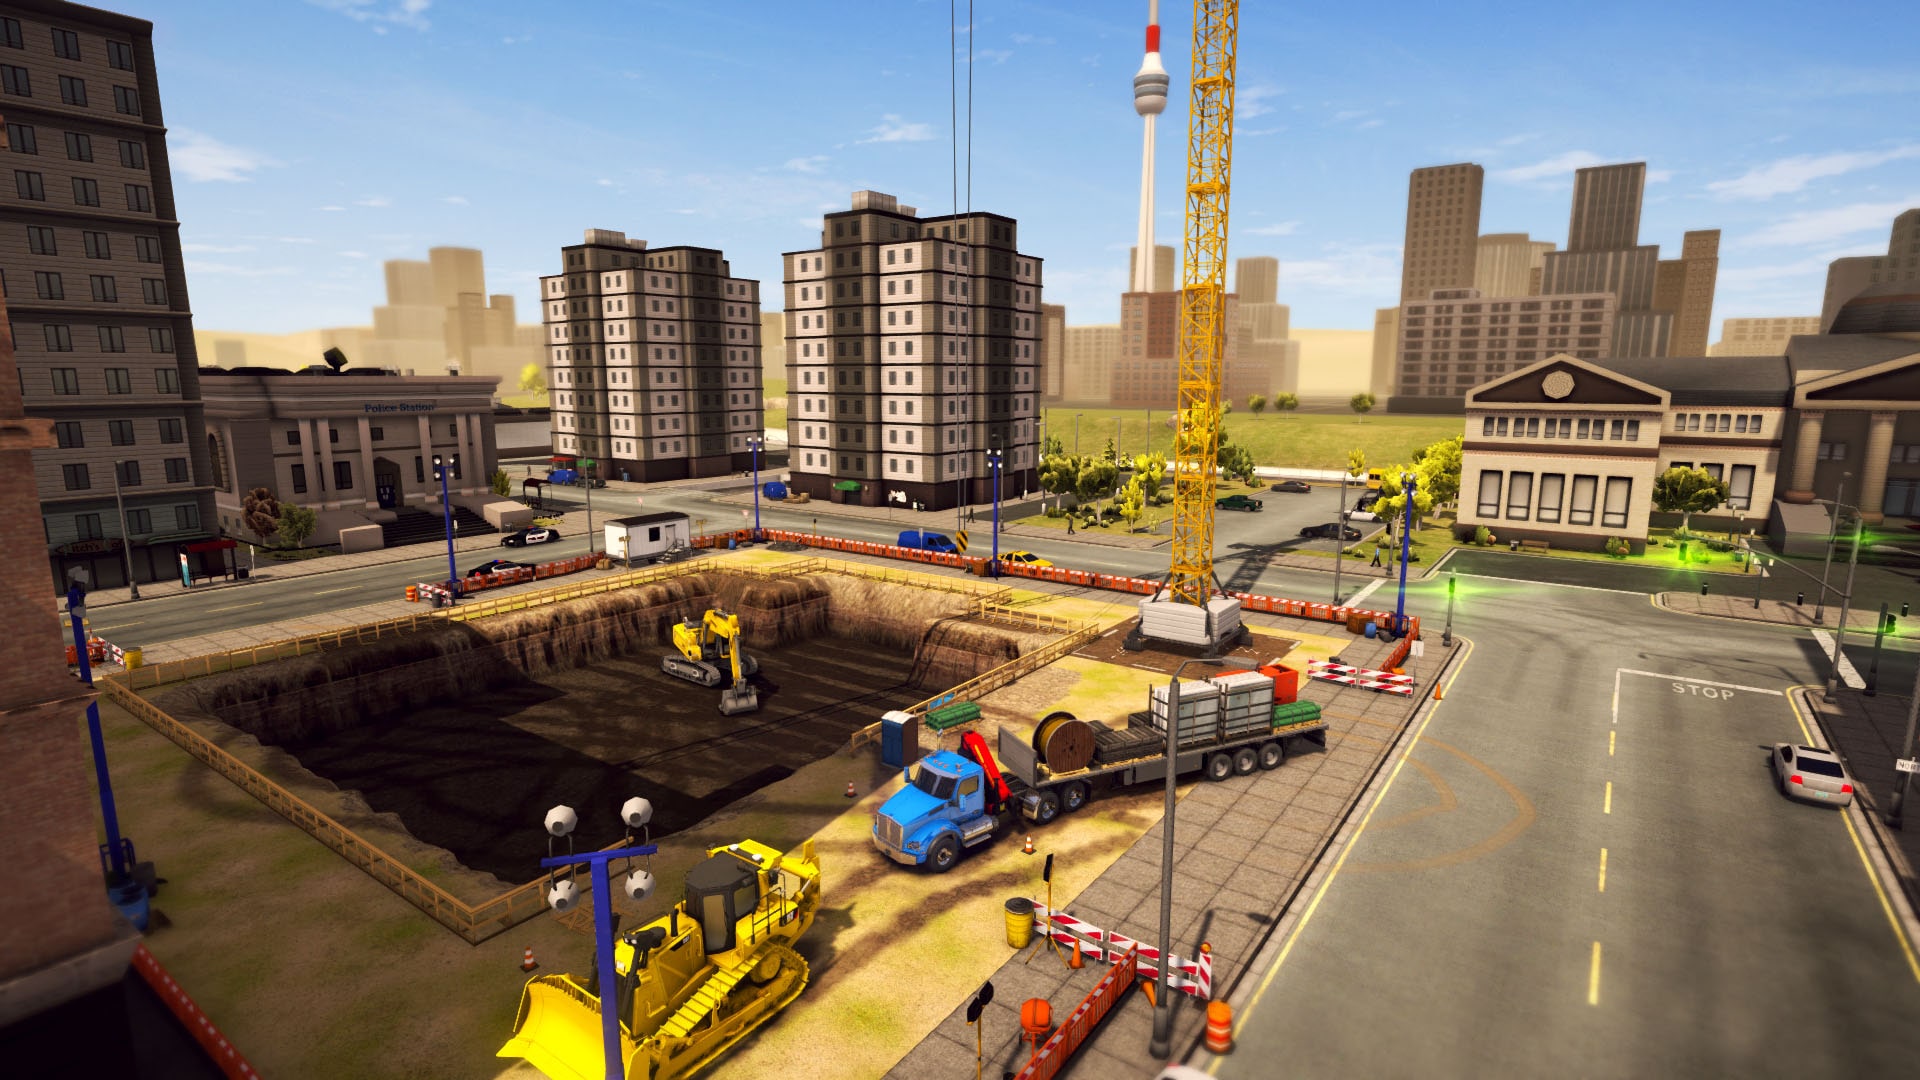 Construction Simulator 2 US - Console Edition